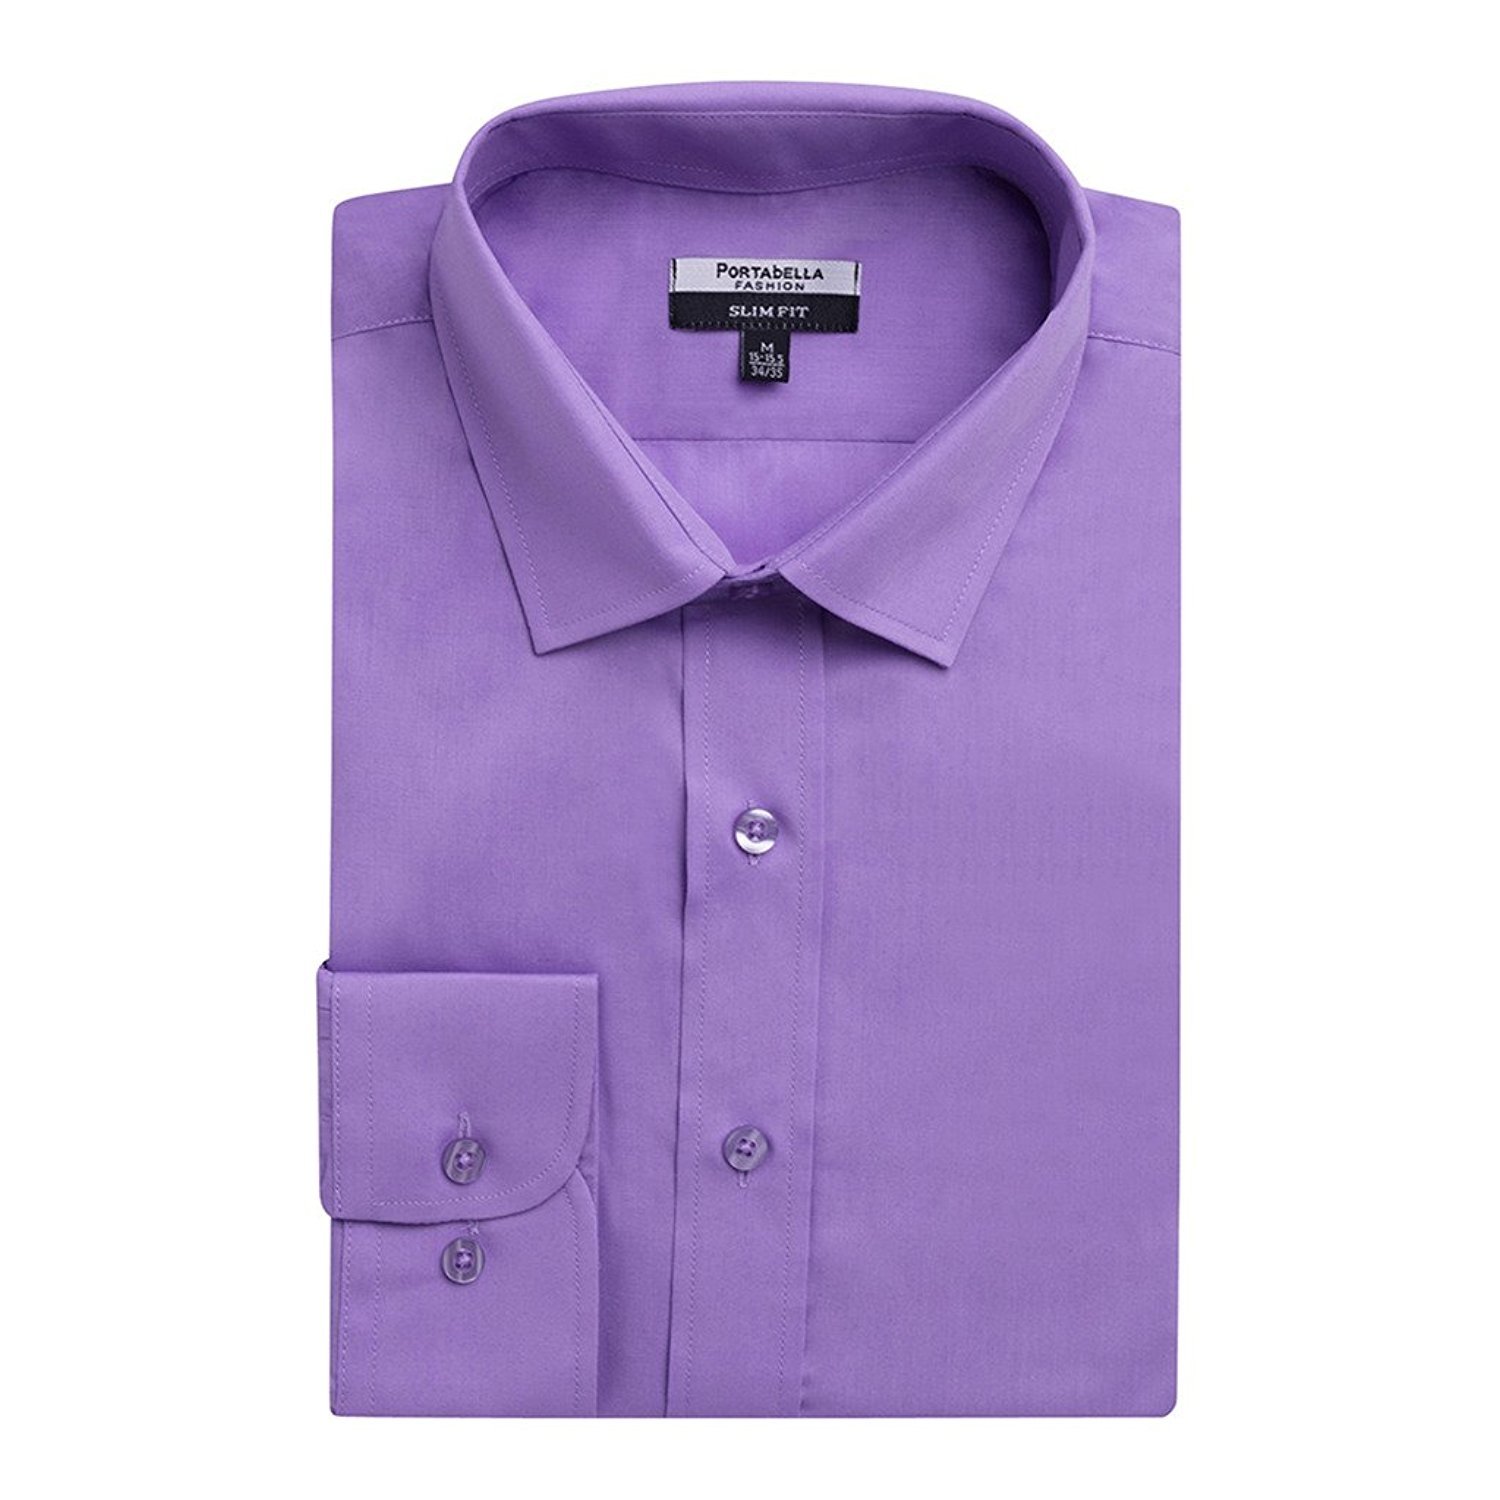 Portabella Men's Slim Fit Long Sleeve Solid Dress Shirt - More Colors ...